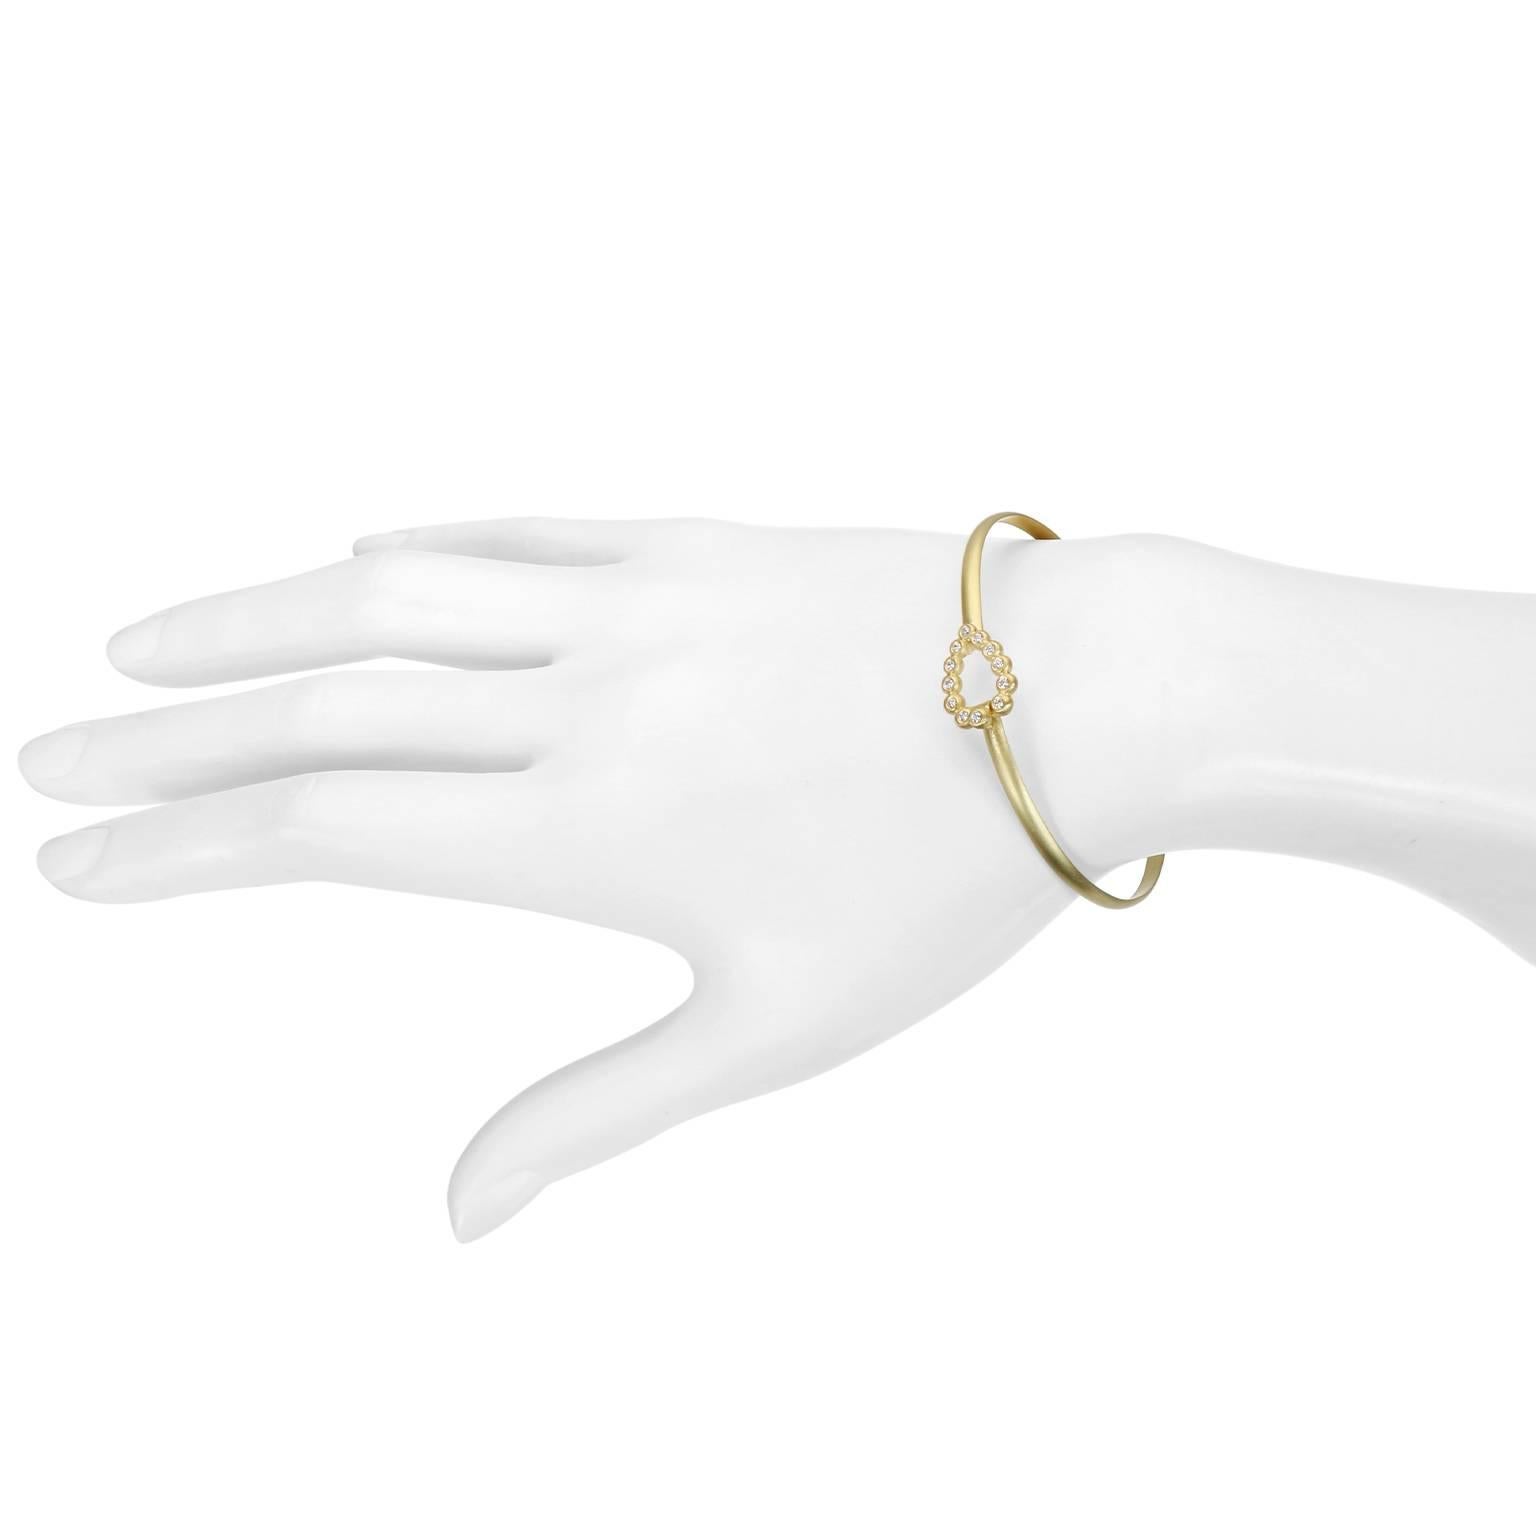 Faye Kim 18k Gold Bangle Bracelet with Diamond Tear Drop Closure For Sale 1